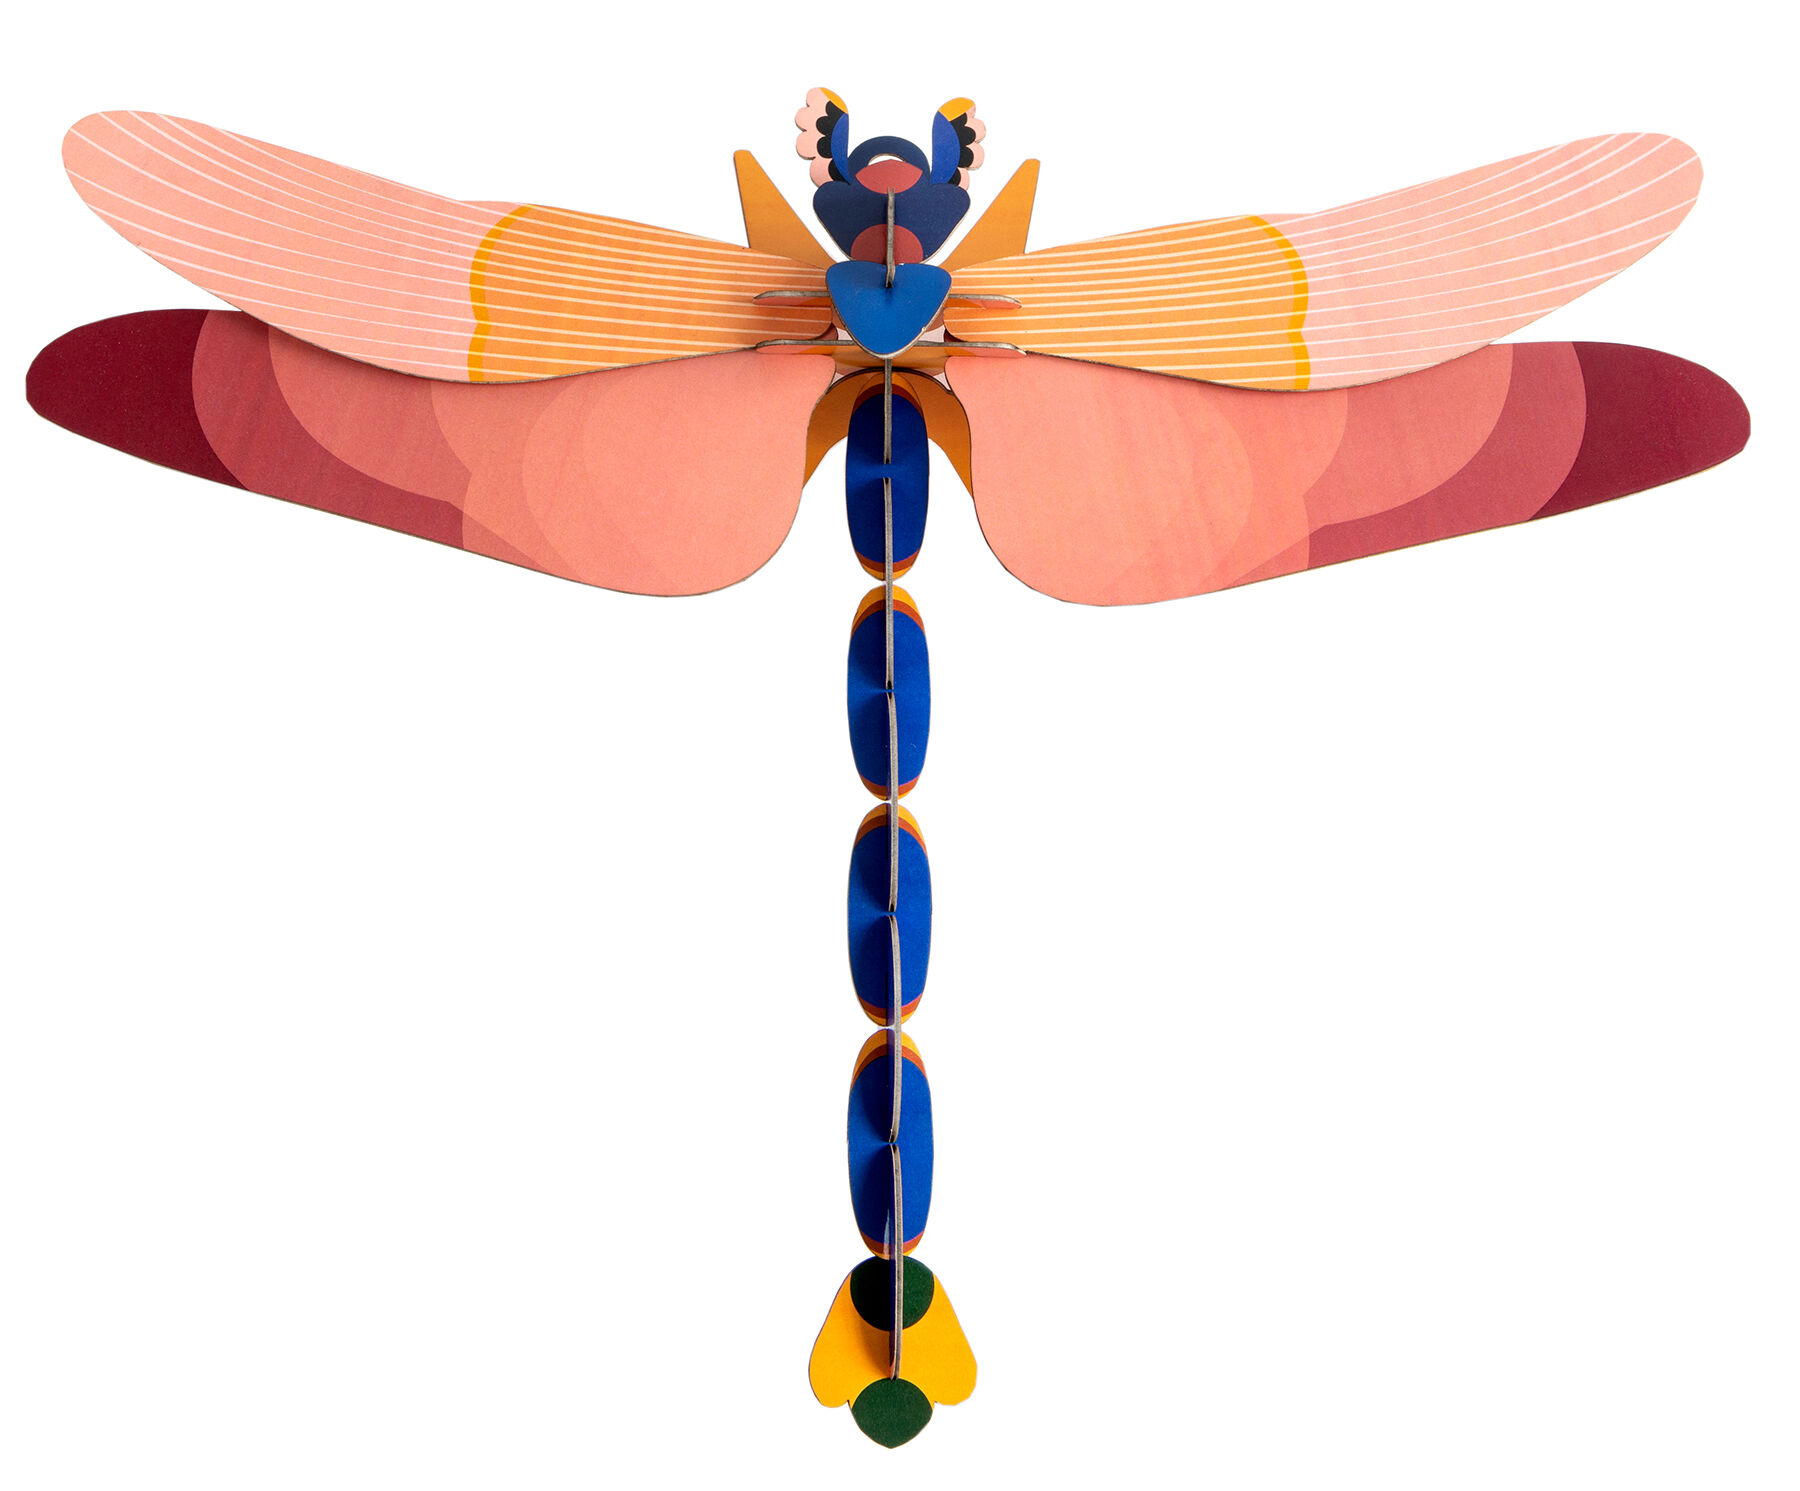 3D-Wandobjekt "Giant Dragonfly" aus recyceltem Karton, DIY von studio ROOF